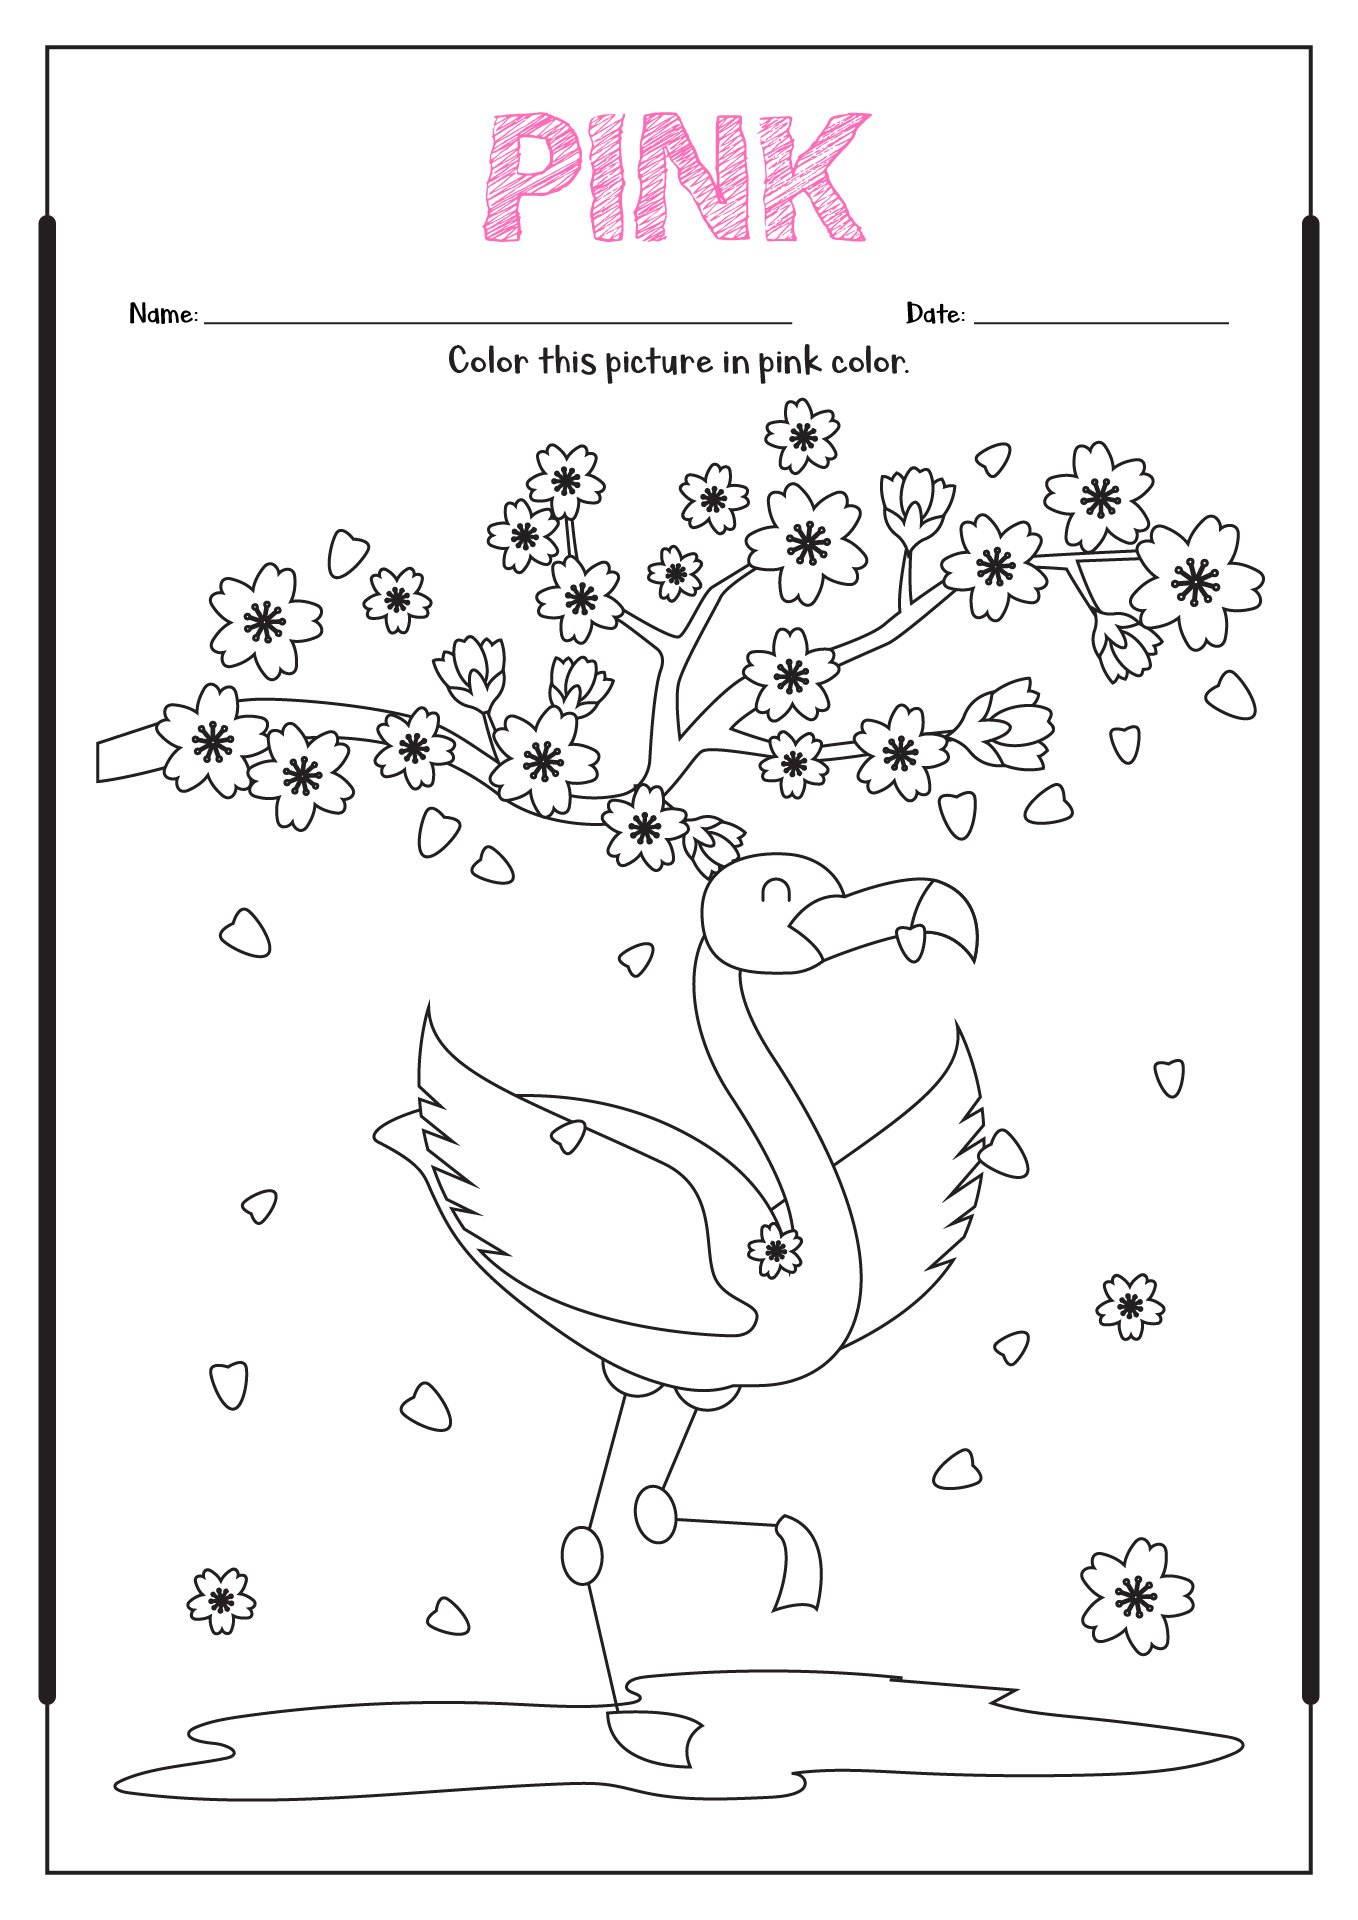 Free Printable Color Pink Worksheets For Preschool